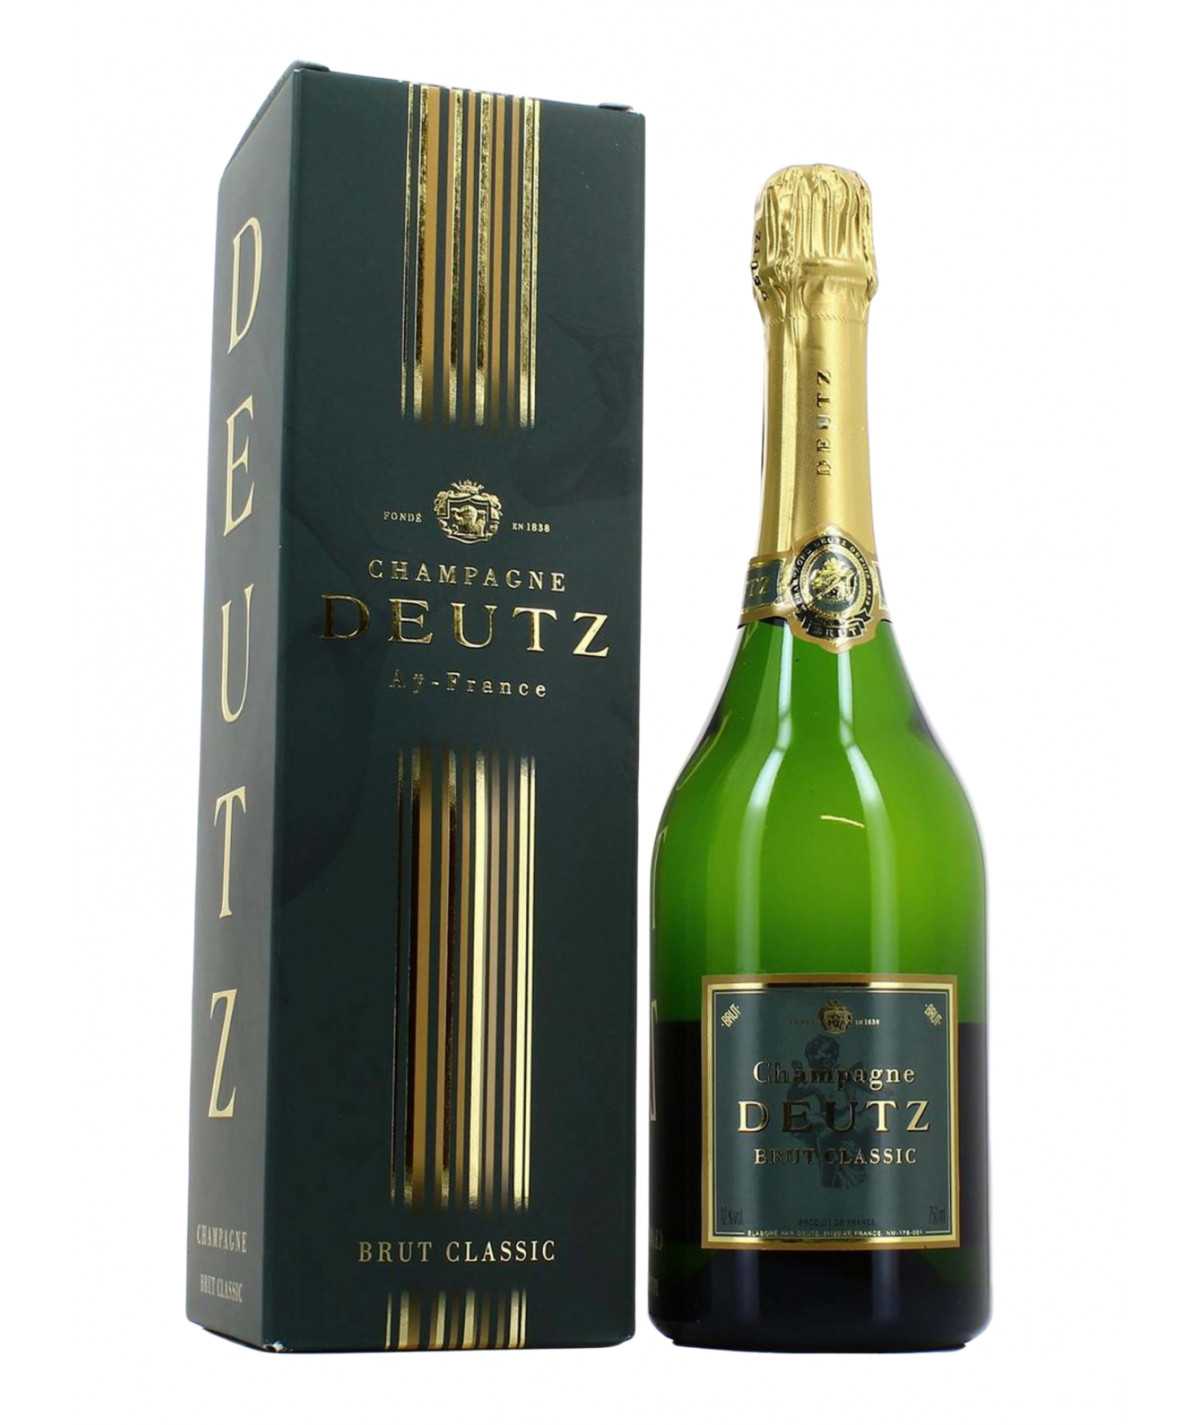 Champagne DEUTZ Brut Classic with Case - Bottle